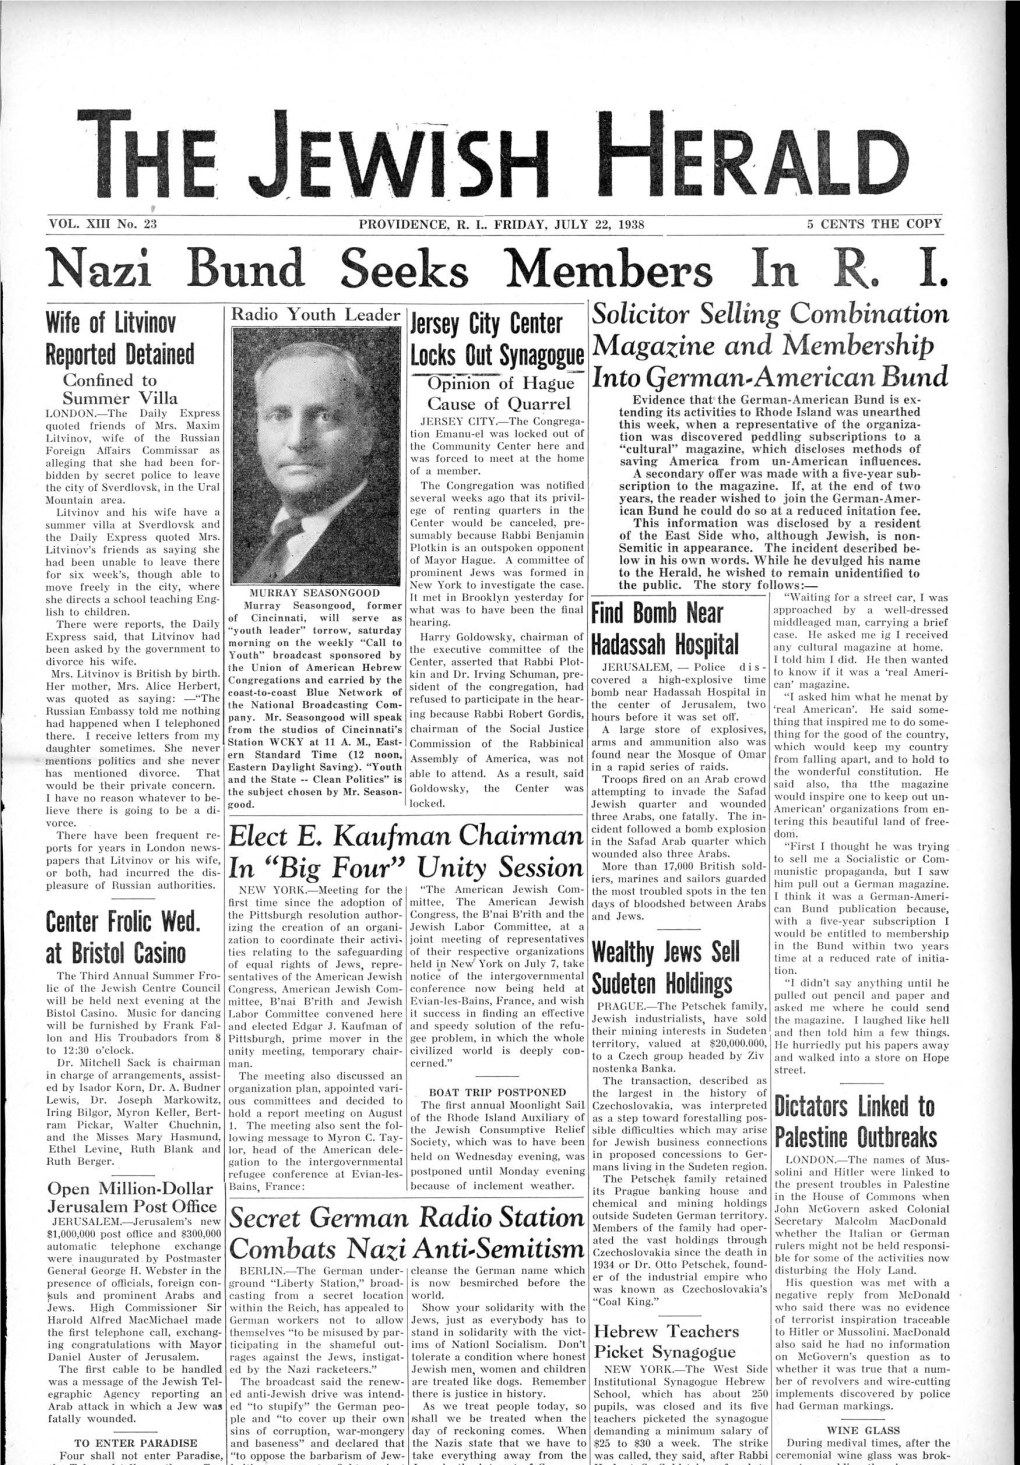 Nazi Bund' Seeks Members in R. I